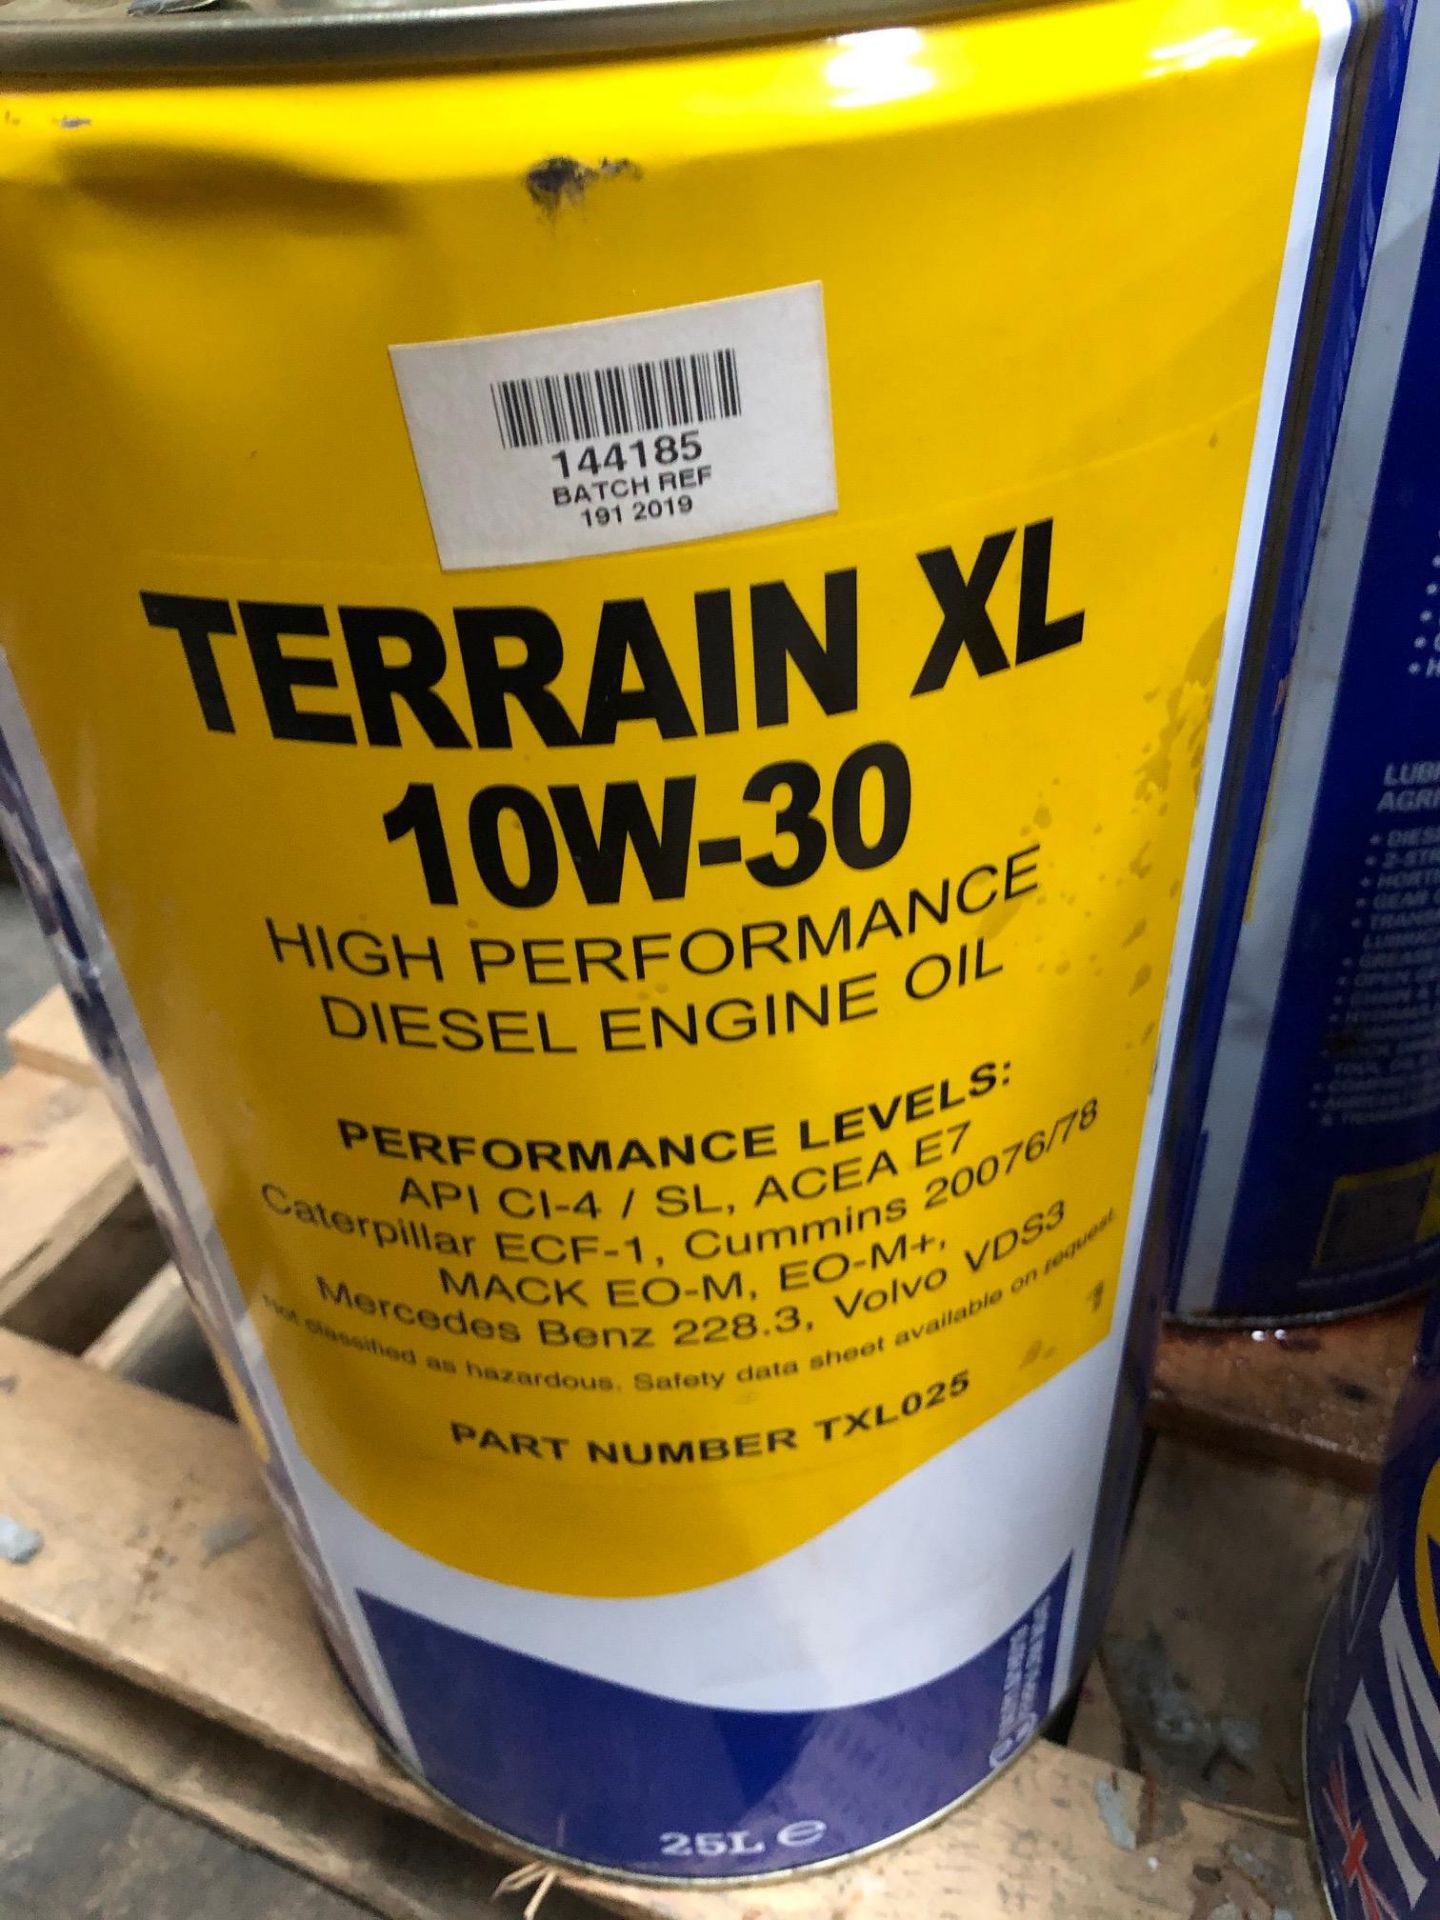 2 x 25L Drums of Morris TXL 025 Terrain XL 10W-30 High Performance Engine Oil - Image 4 of 4